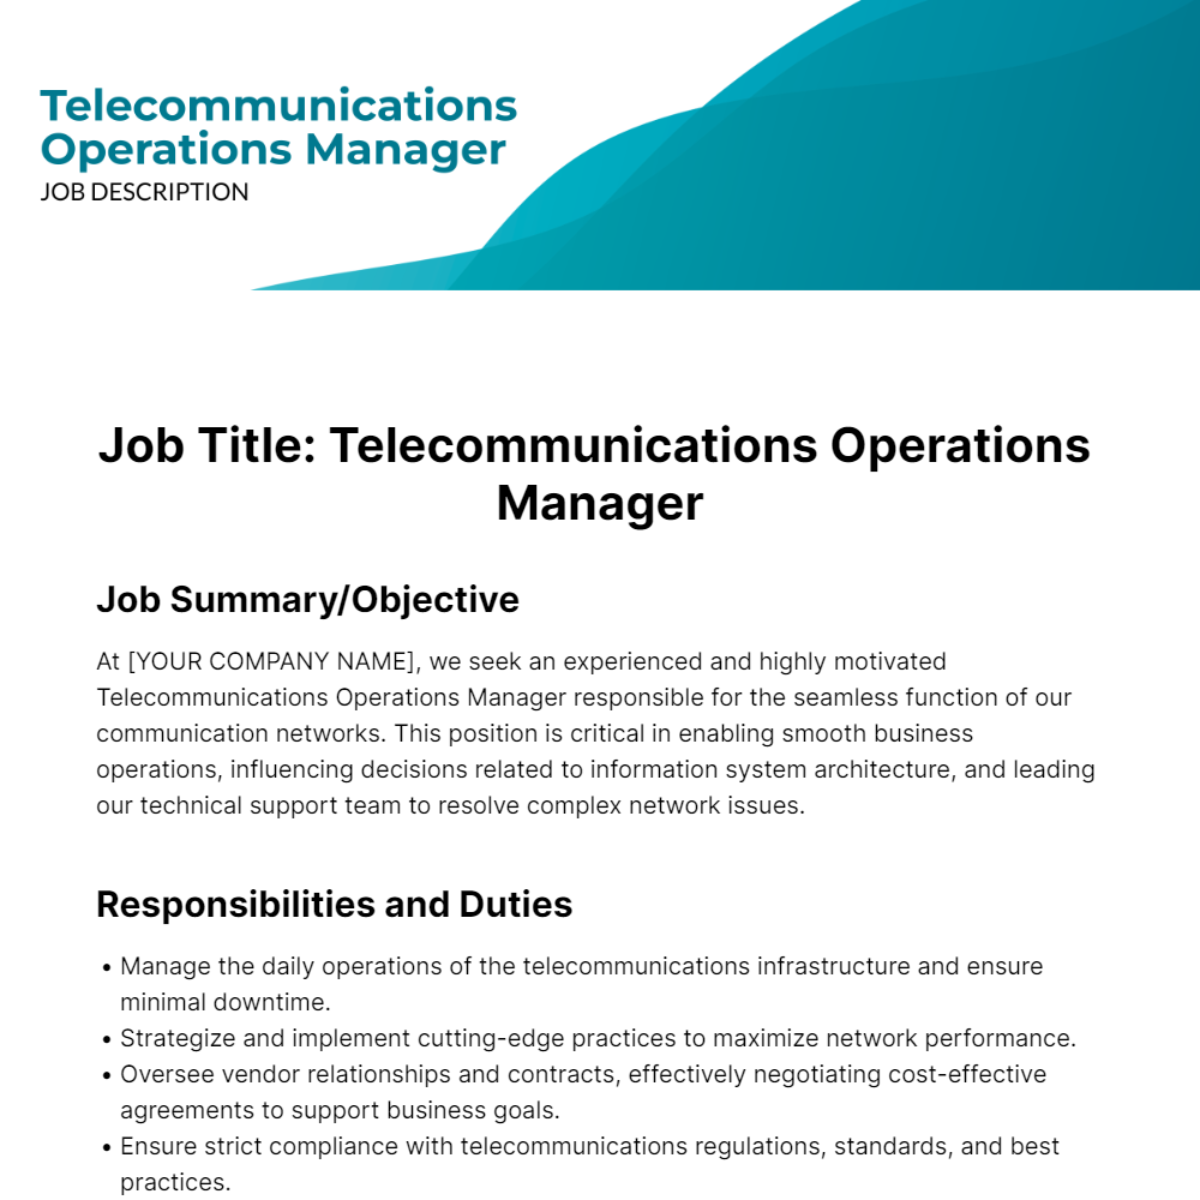 Telecommunications Operations Manager Job Description Template